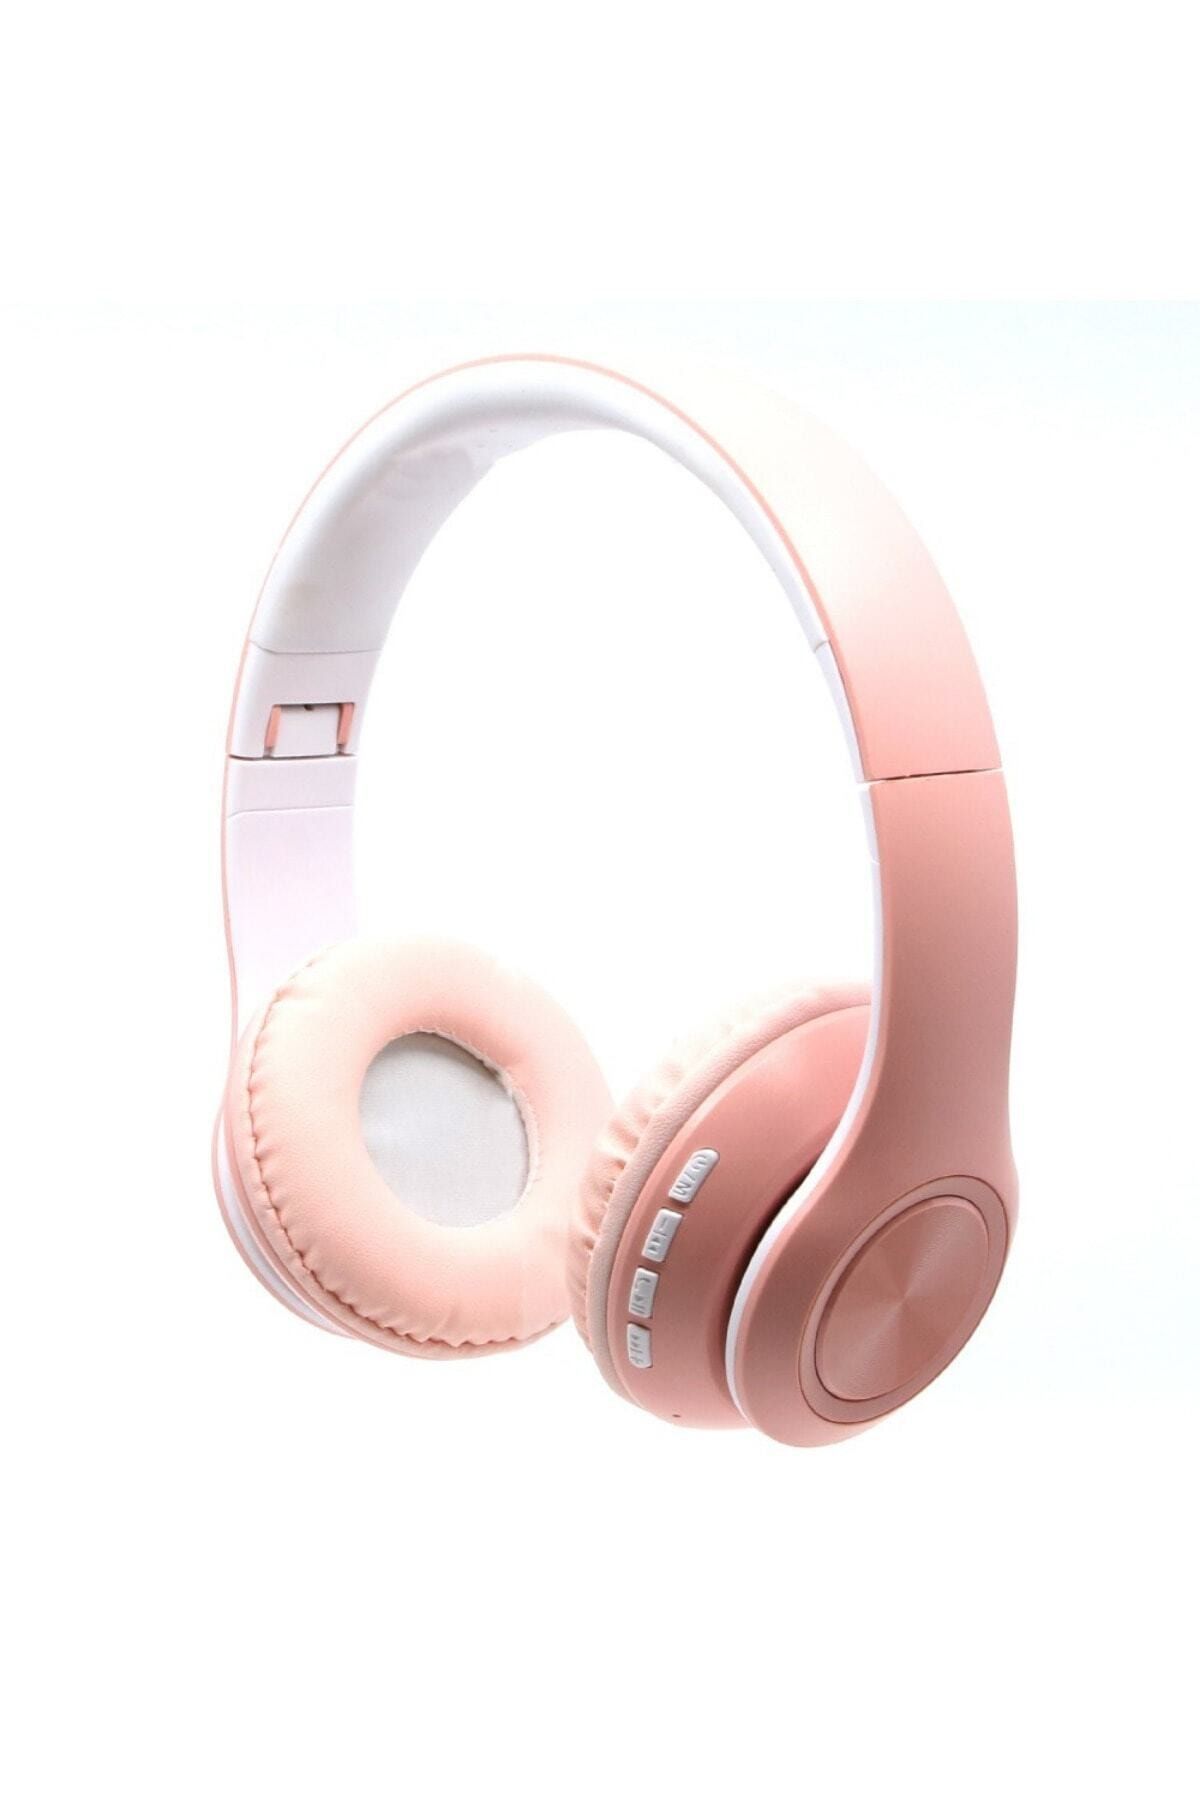 Teknoloji Gelsin Kablosuz Mikrofonlu Bluetooth Kulak Üstü Pembe Kulaklık